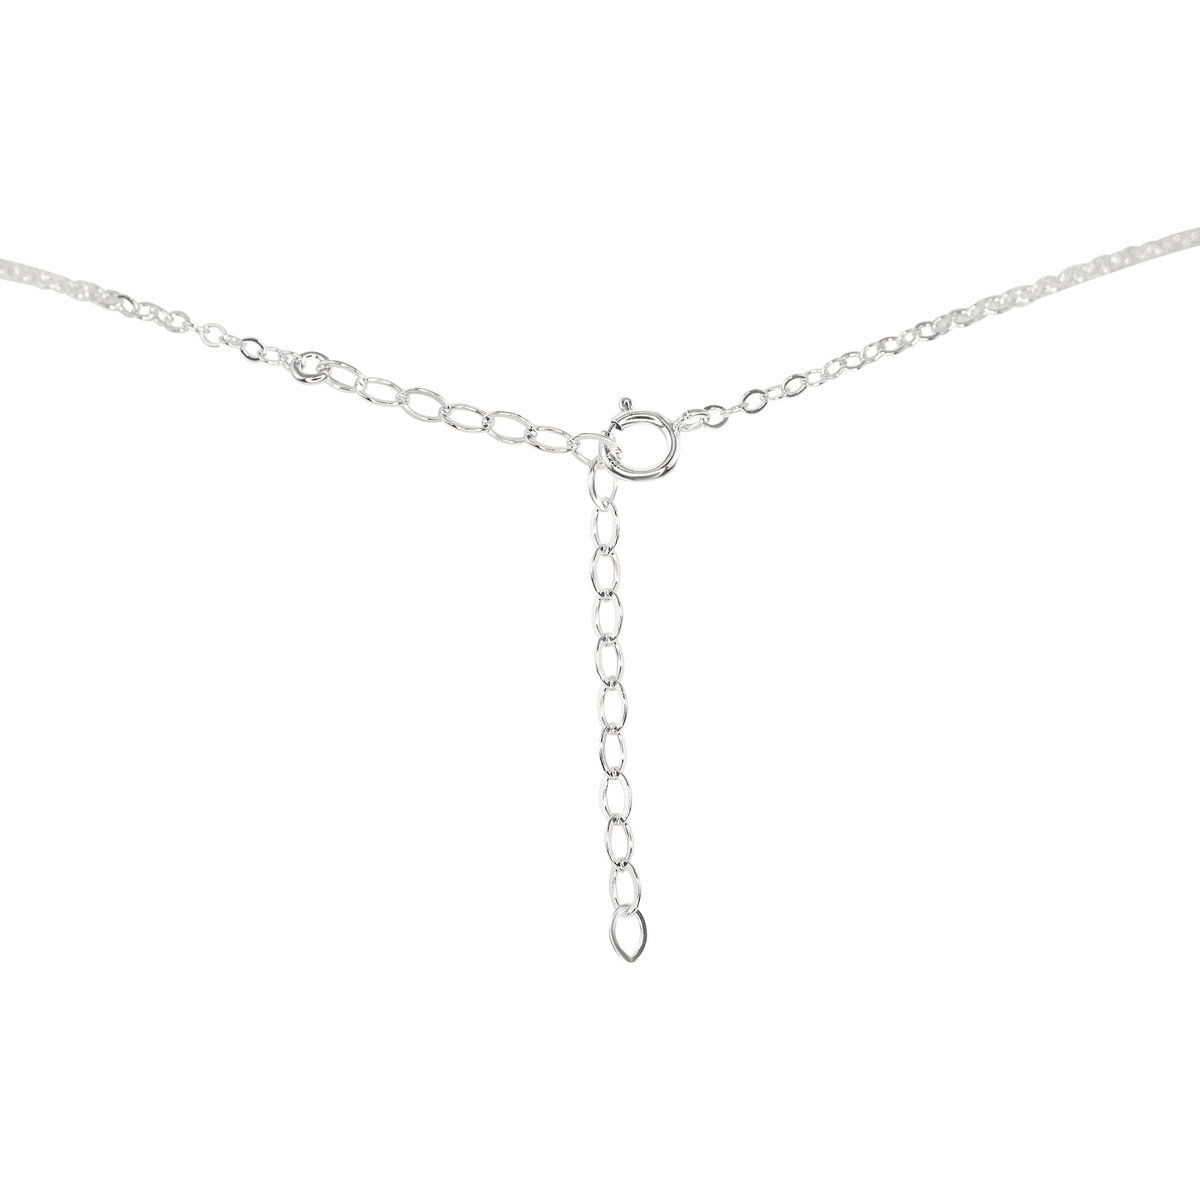 Citrine Chip Bead Bar Necklace - Citrine Chip Bead Bar Necklace - 14k Gold Fill - Luna Tide Handmade Crystal Jewellery